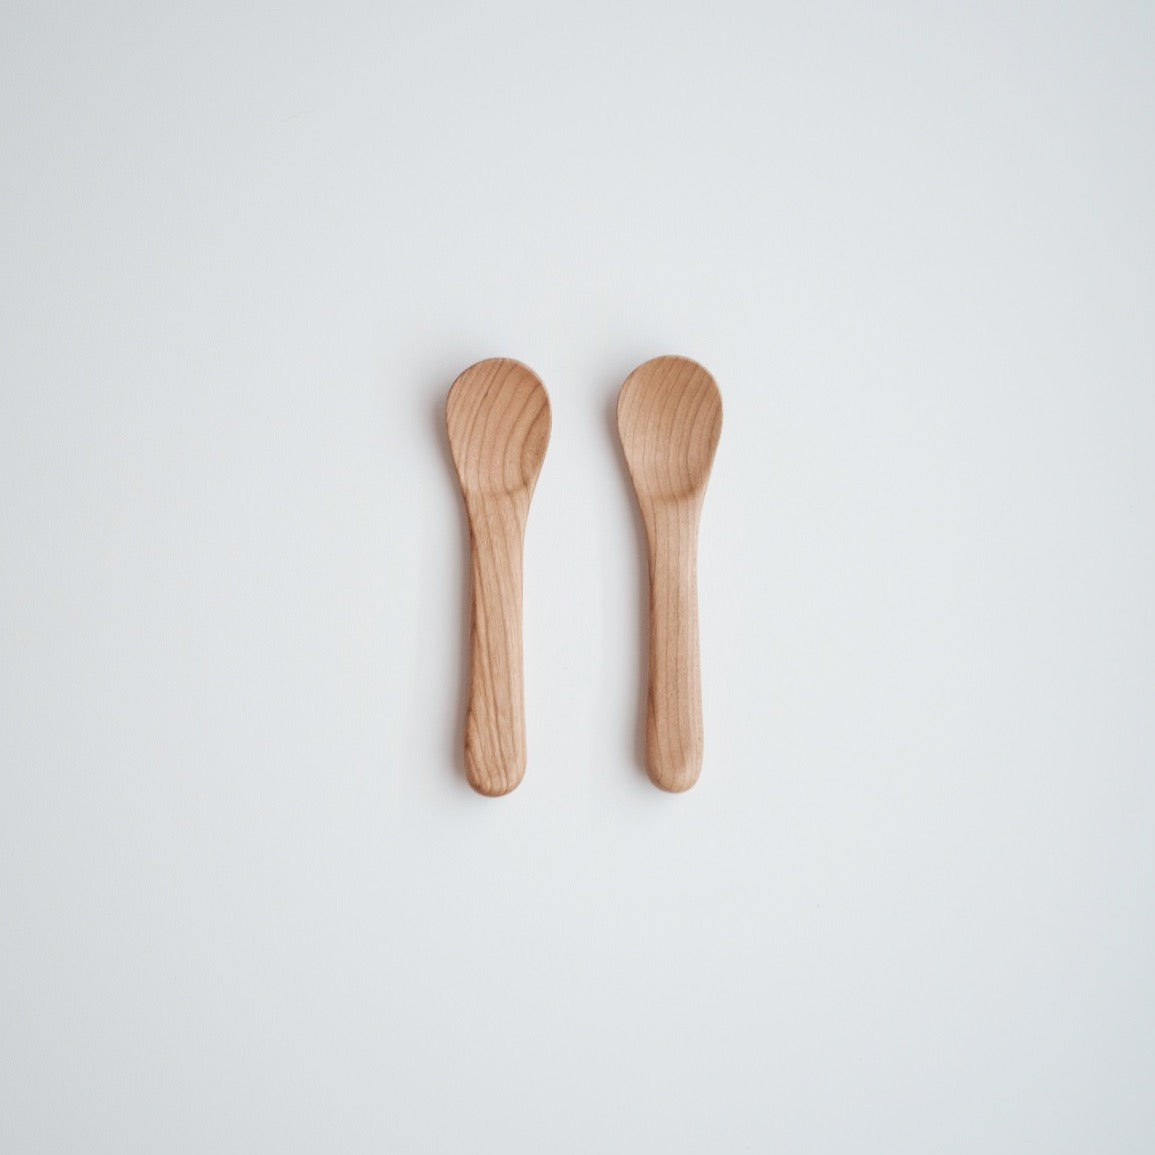 Hand Carved Wooden Dessert Spoon Set of 2